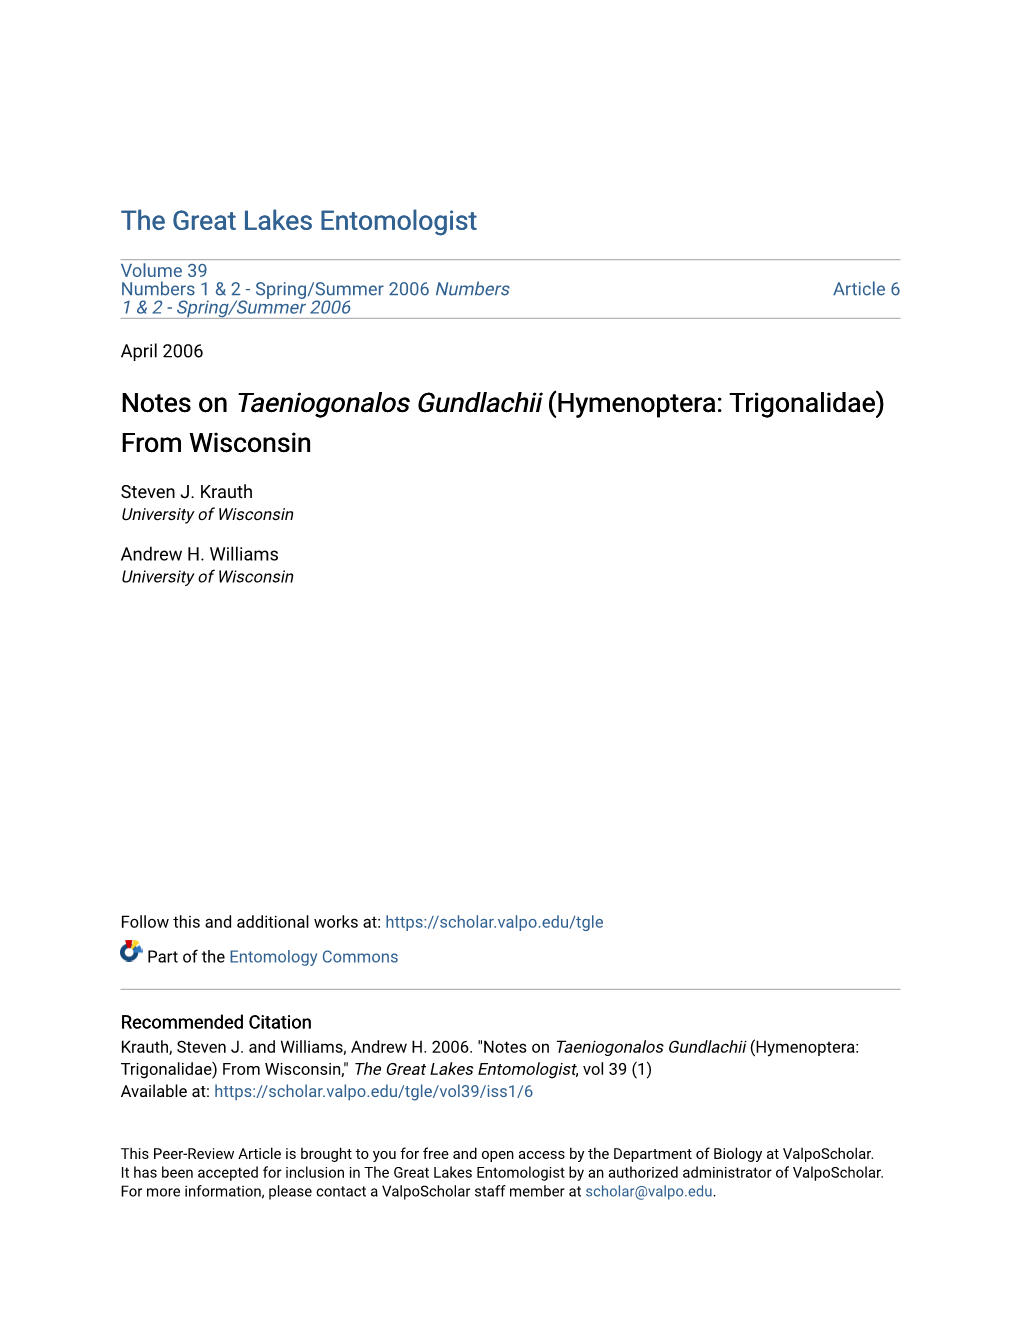 Notes on Taeniogonalos Gundlachii (Hymenoptera: Trigonalidae) from Wisconsin